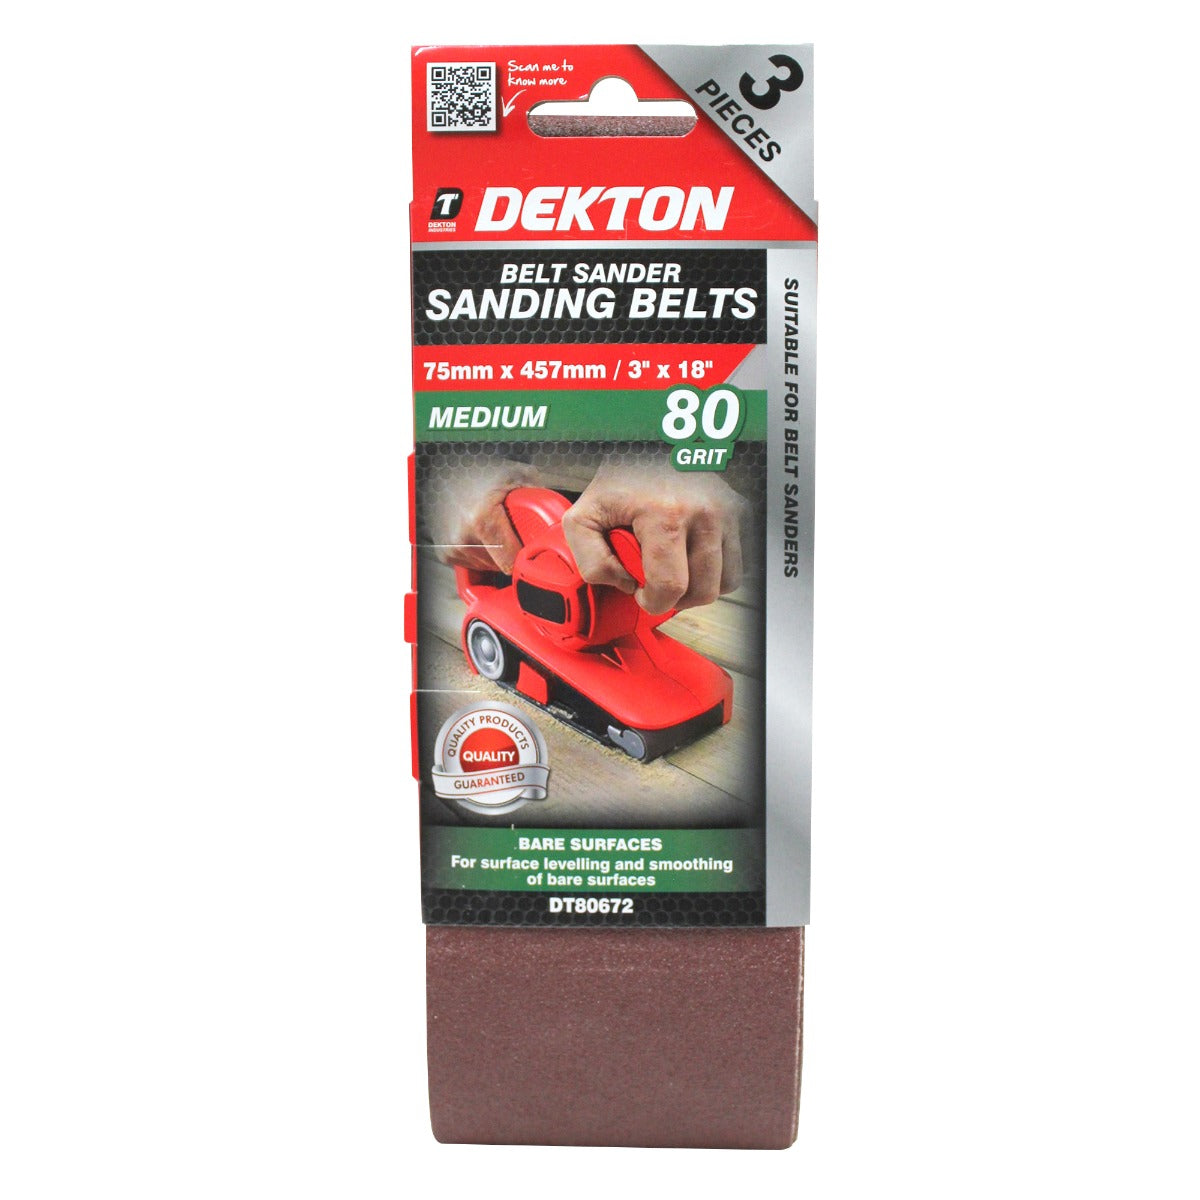 Dekton Belt Sander Sanding Belts 80 Grit 75 x 457mm Pack of 3